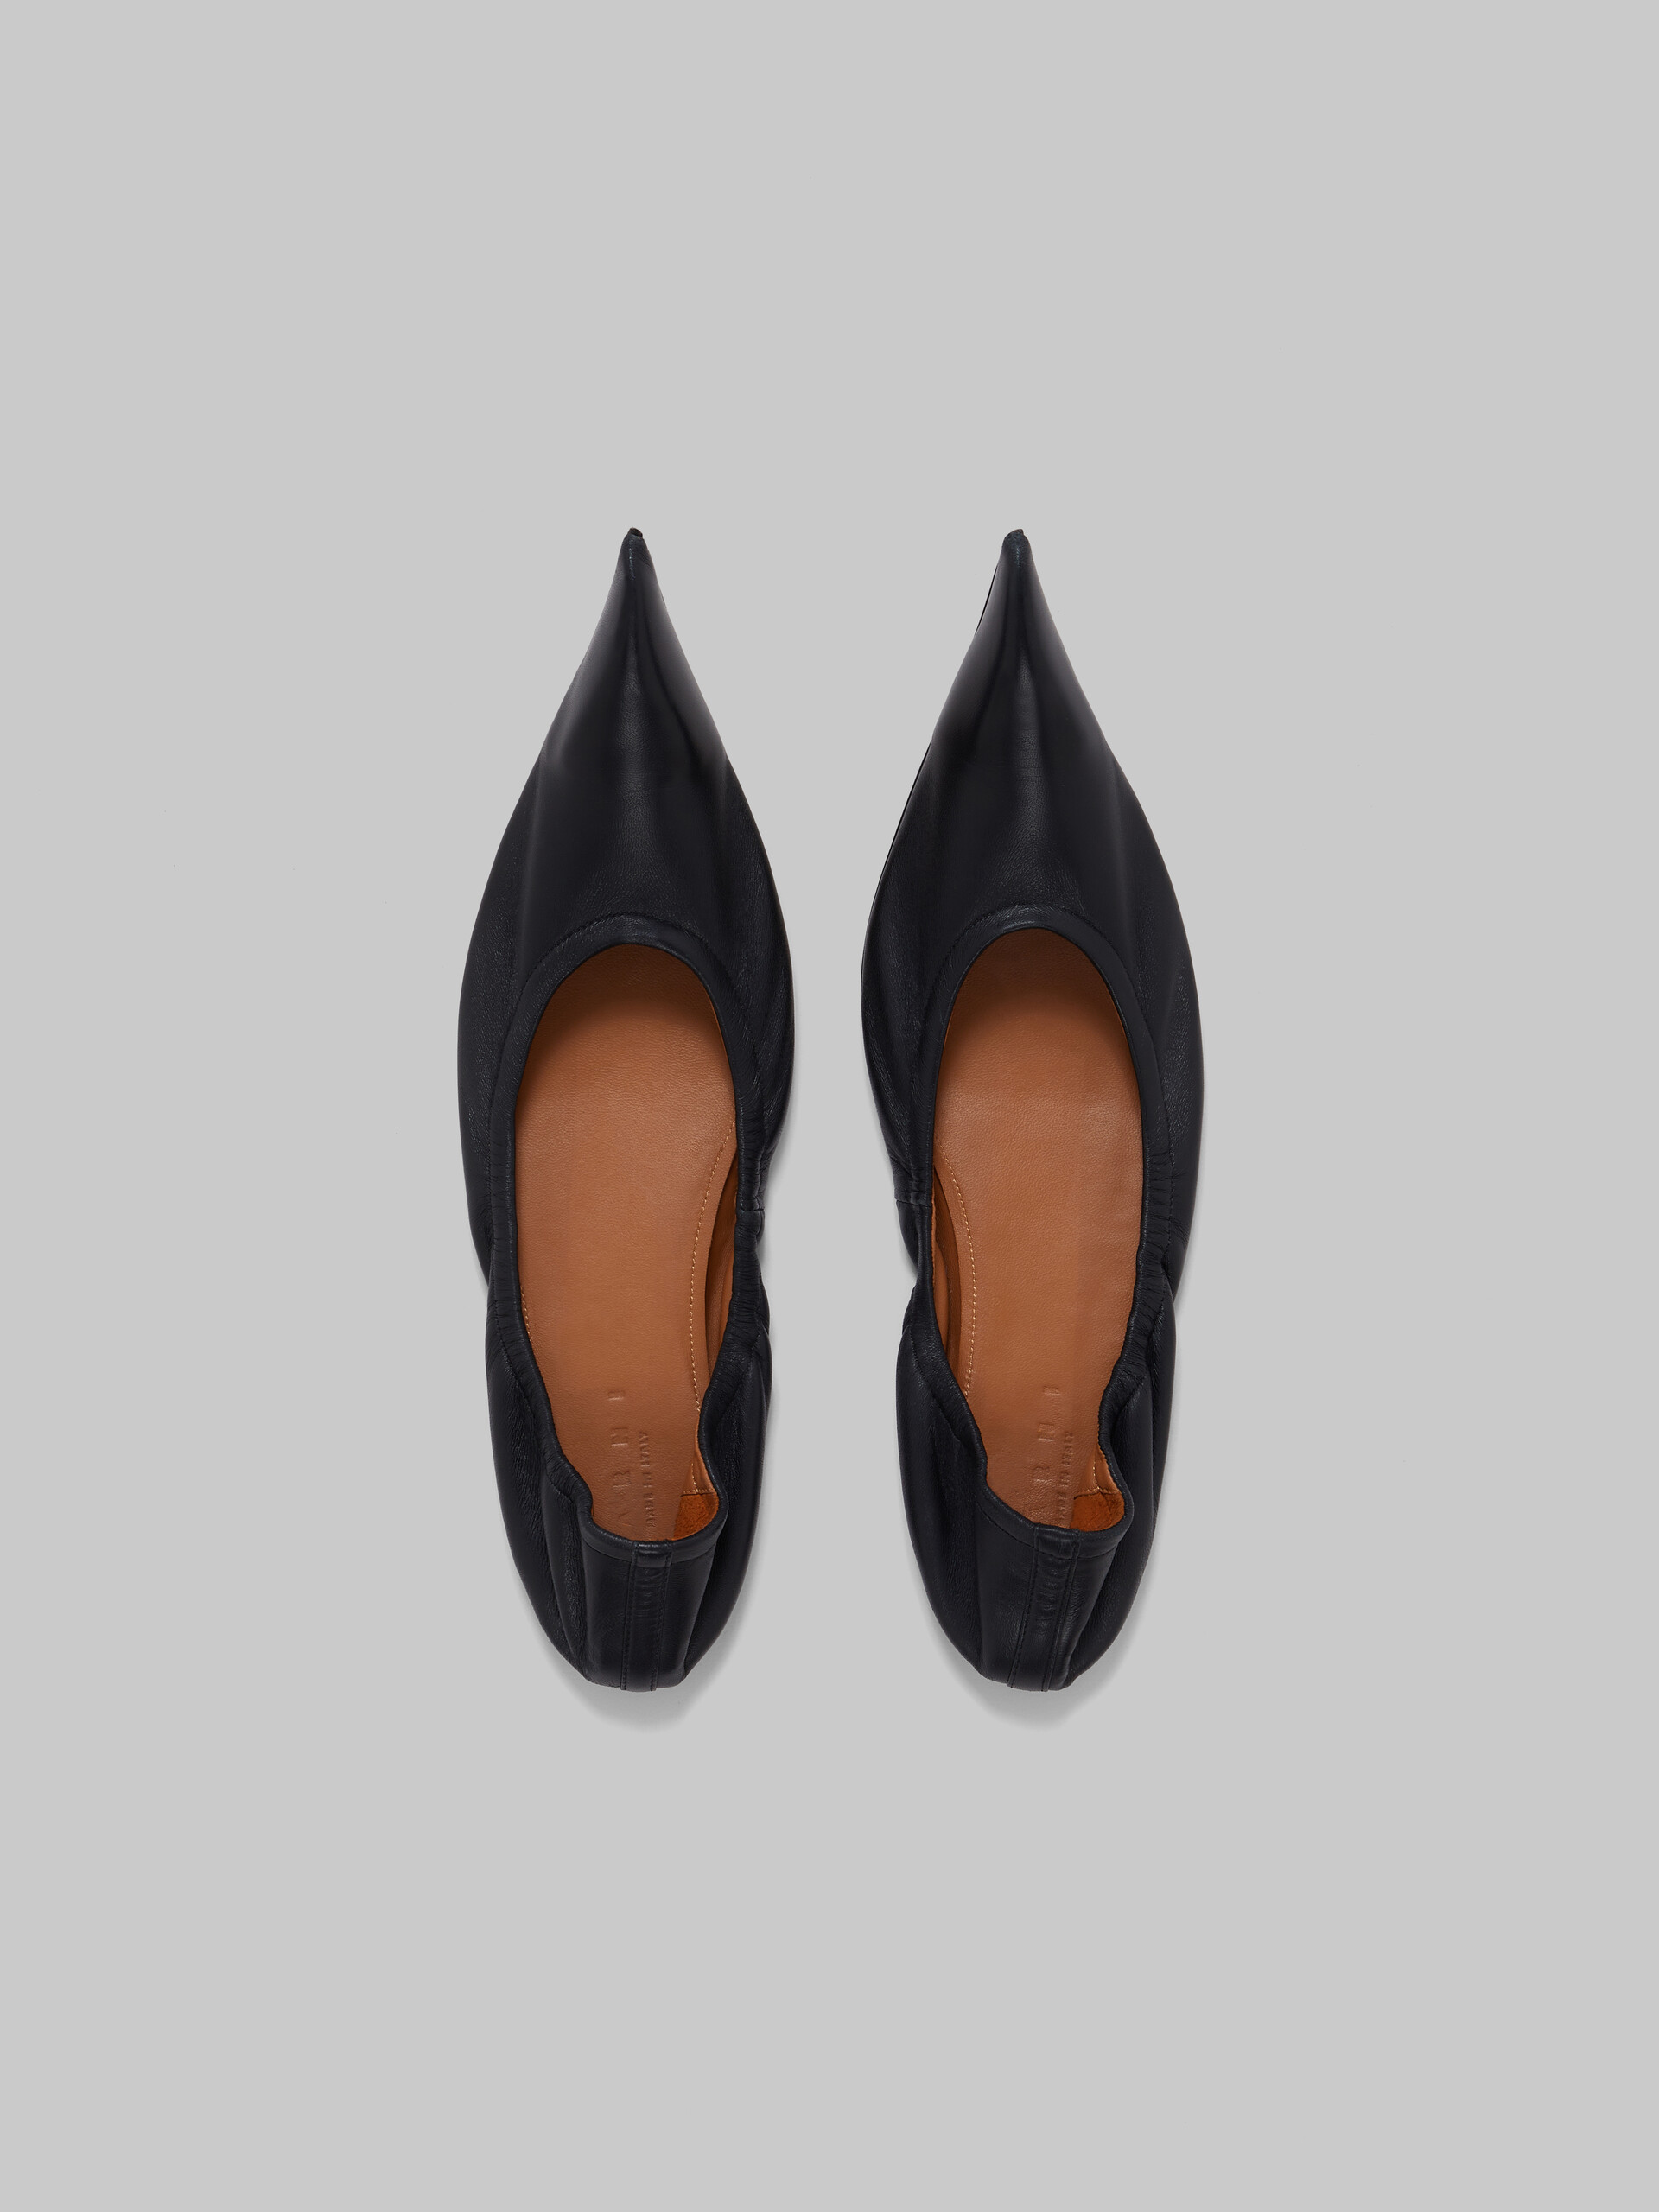 Black nappa pointed-toe ballet flats - Ballet Shoes - Image 4